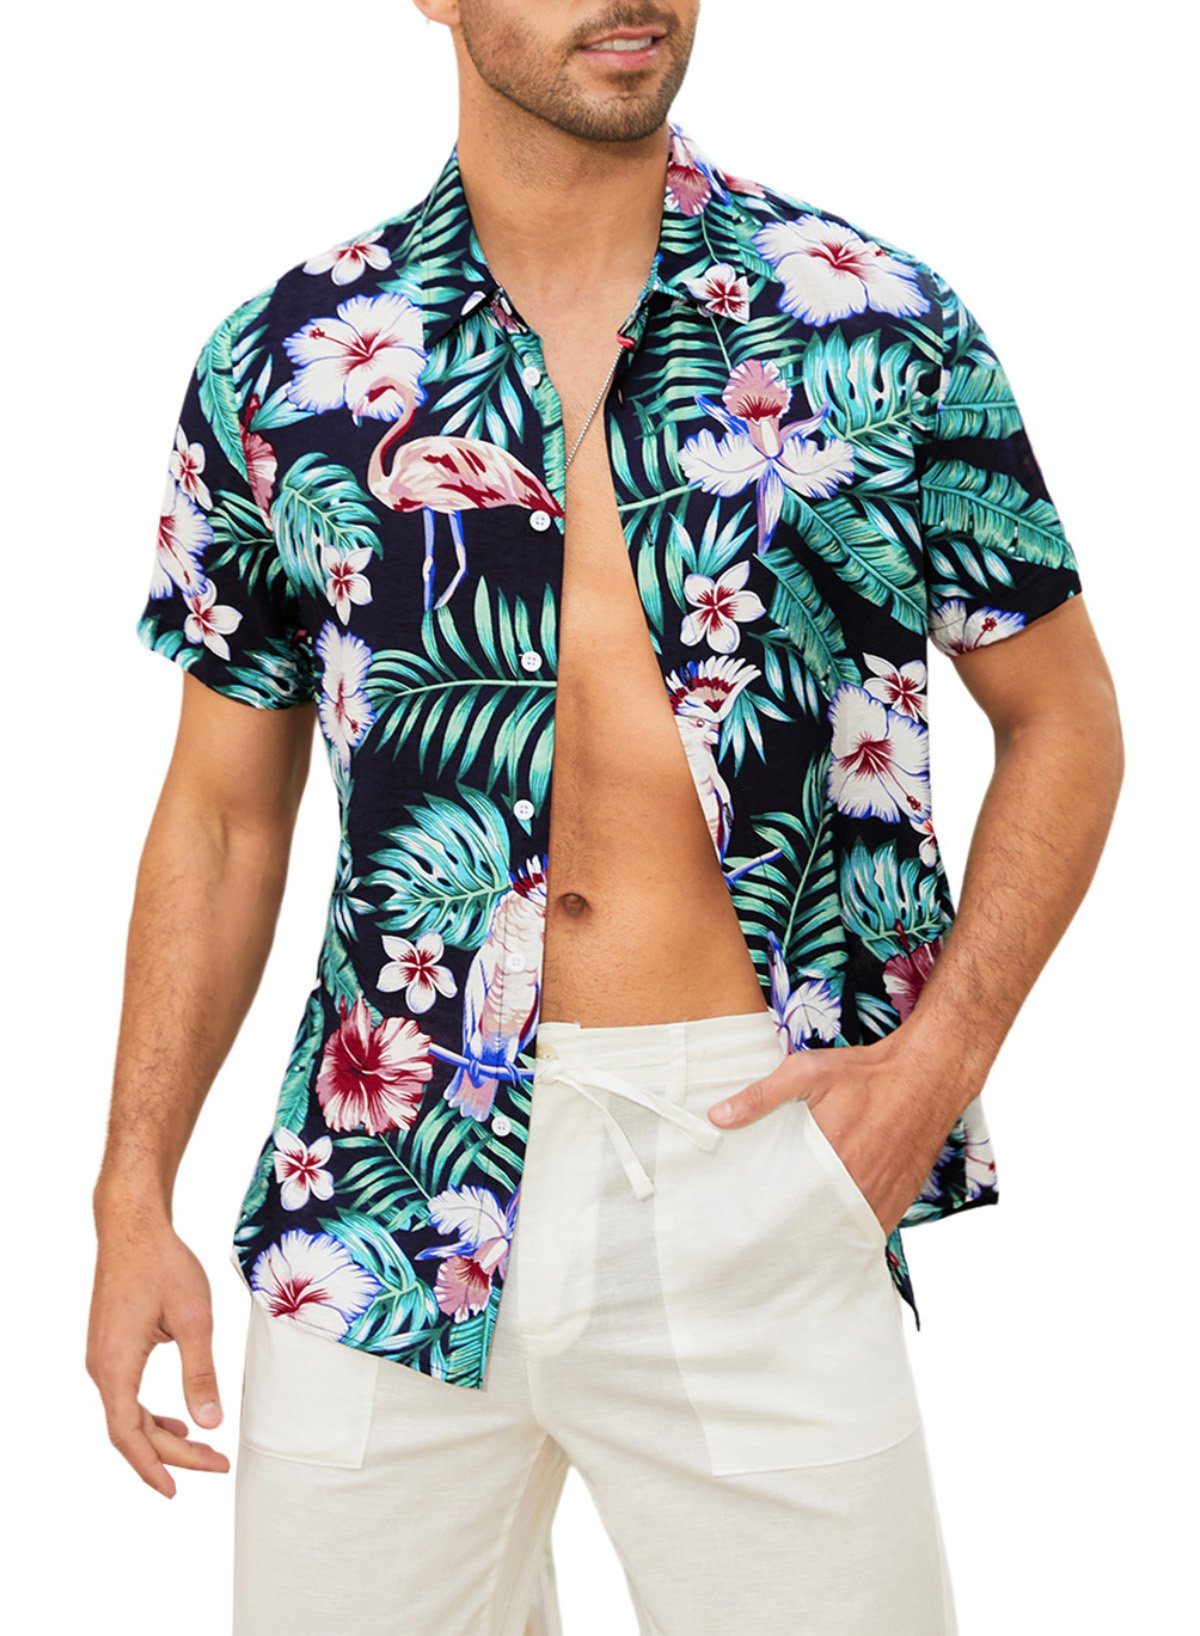 JMIERR Hawaiihemd Männer Funky Hawaiihemd Herren Kurzarm Lässig Hawaii-Print Diverse (Kurzarm)